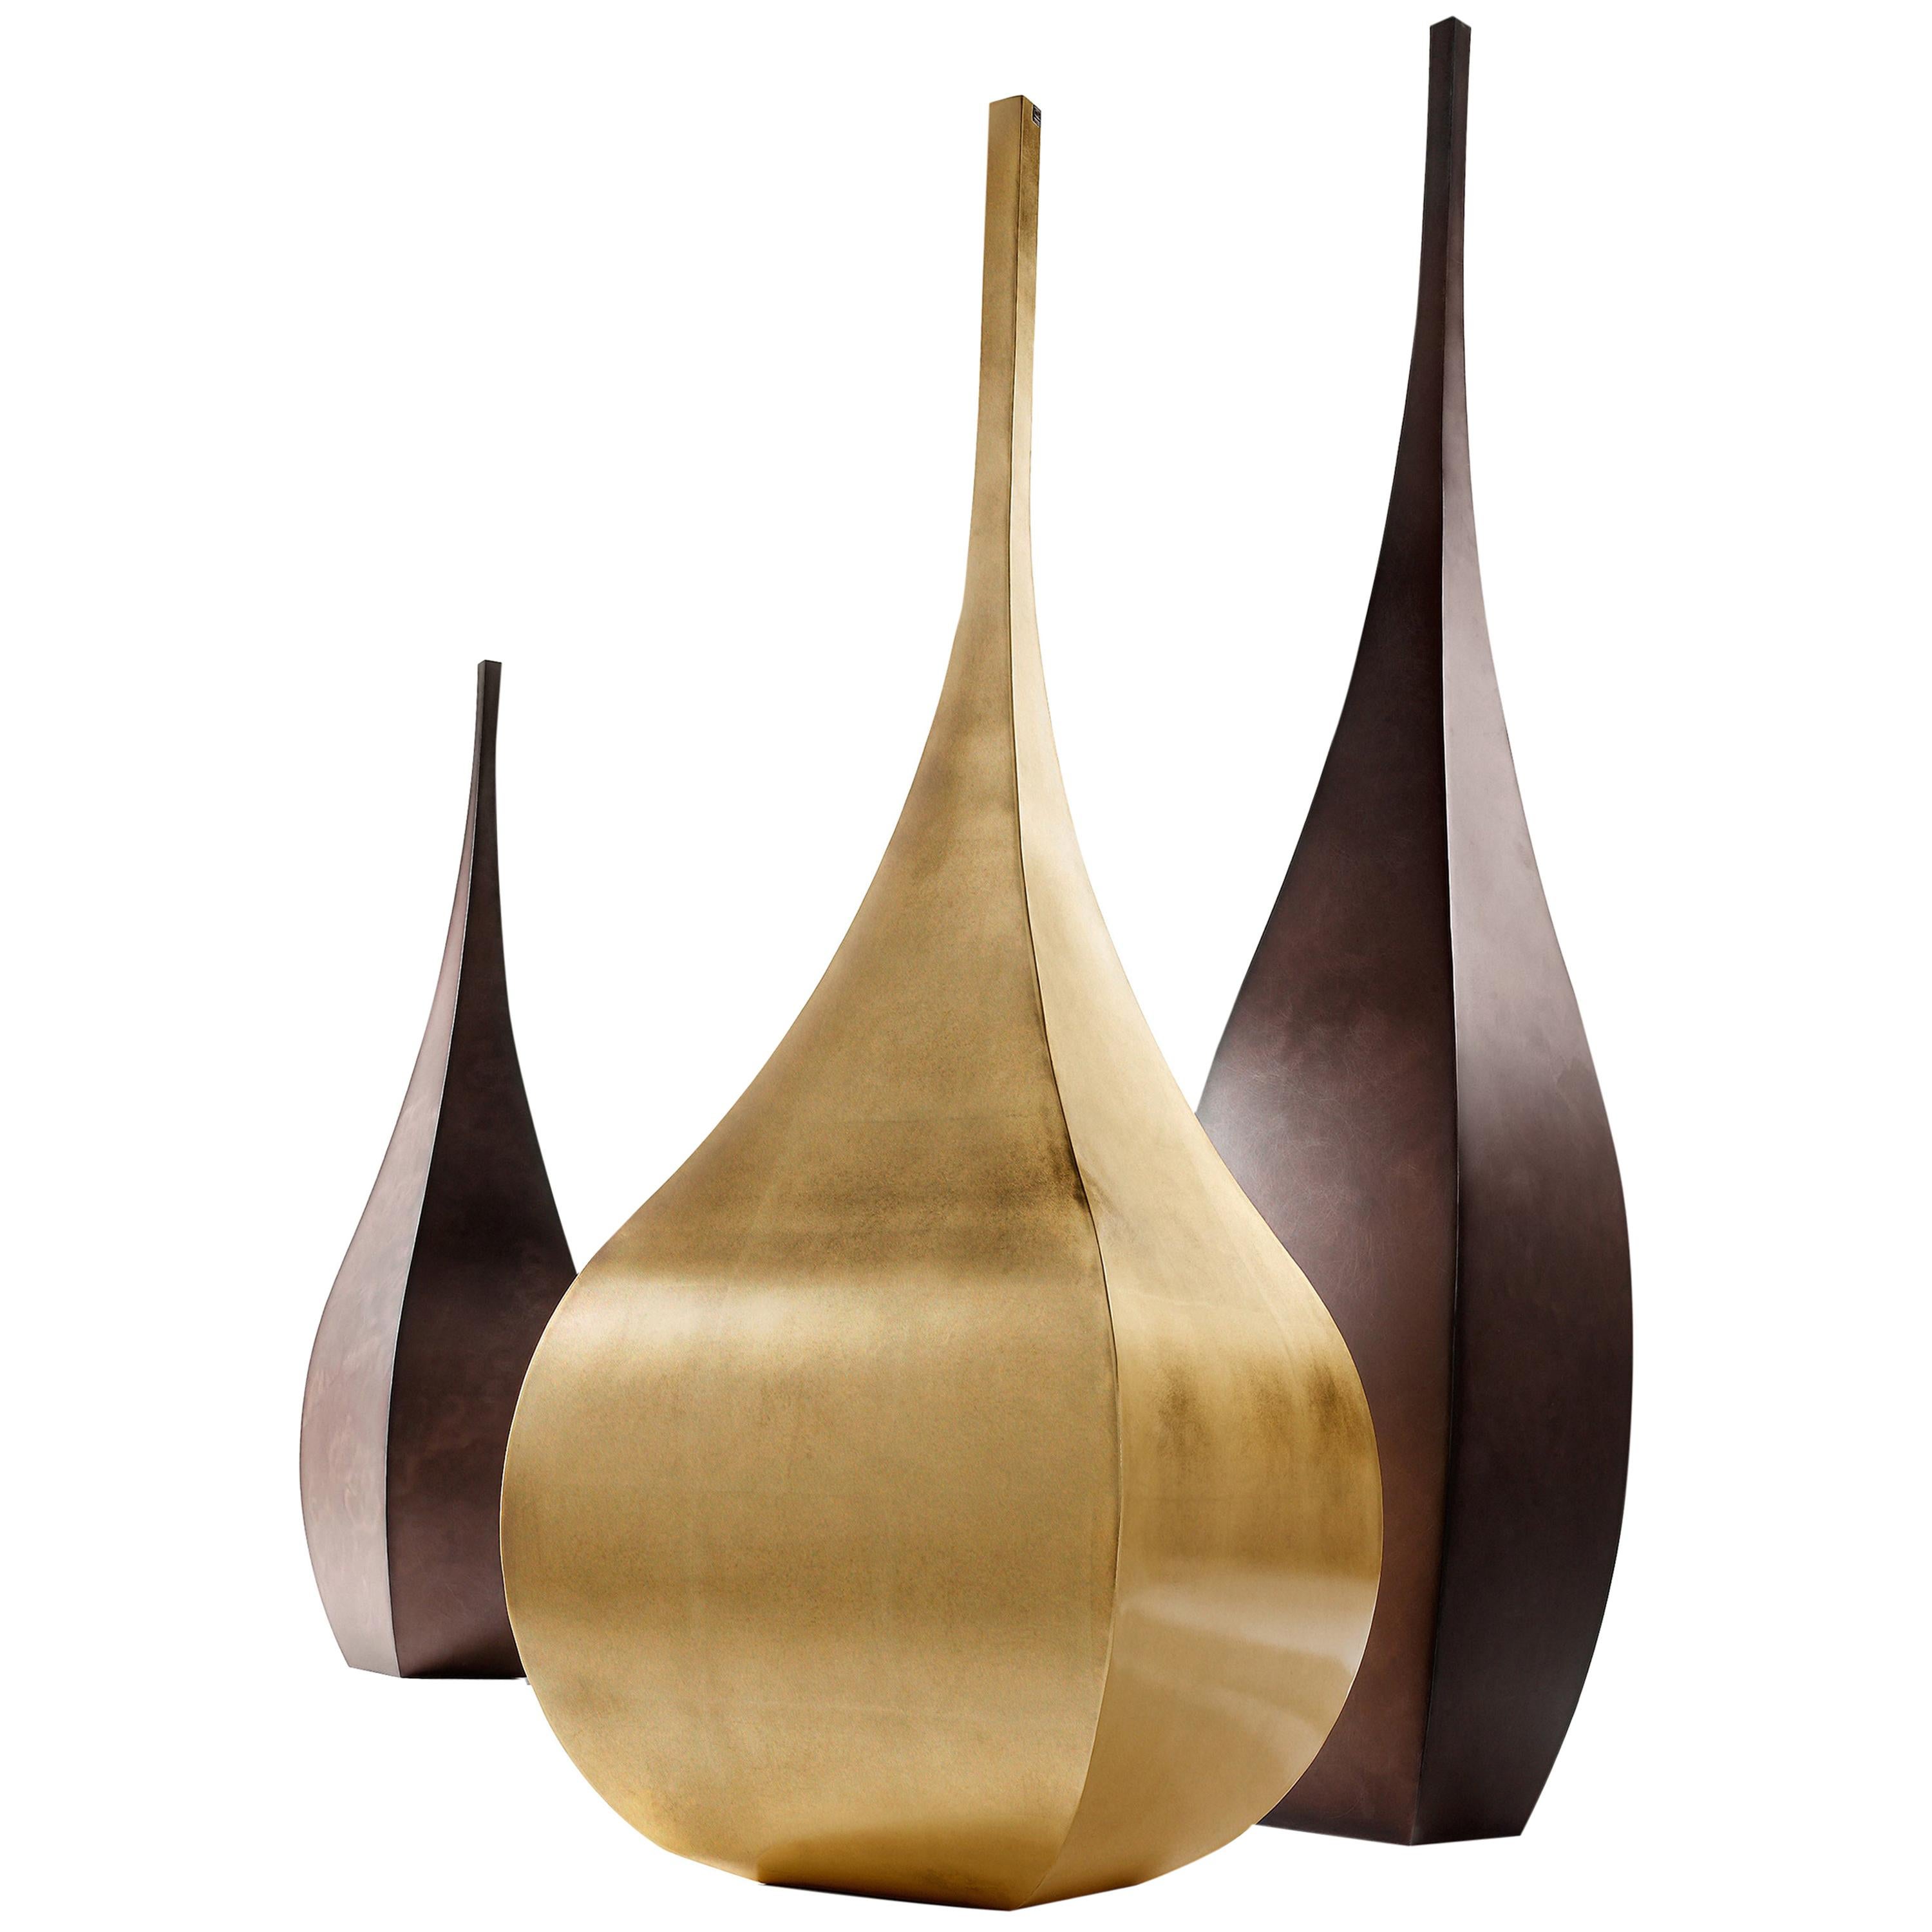 DeCastelli Jaipur 150 Vase in Stainless Steel by Stefano Dussin